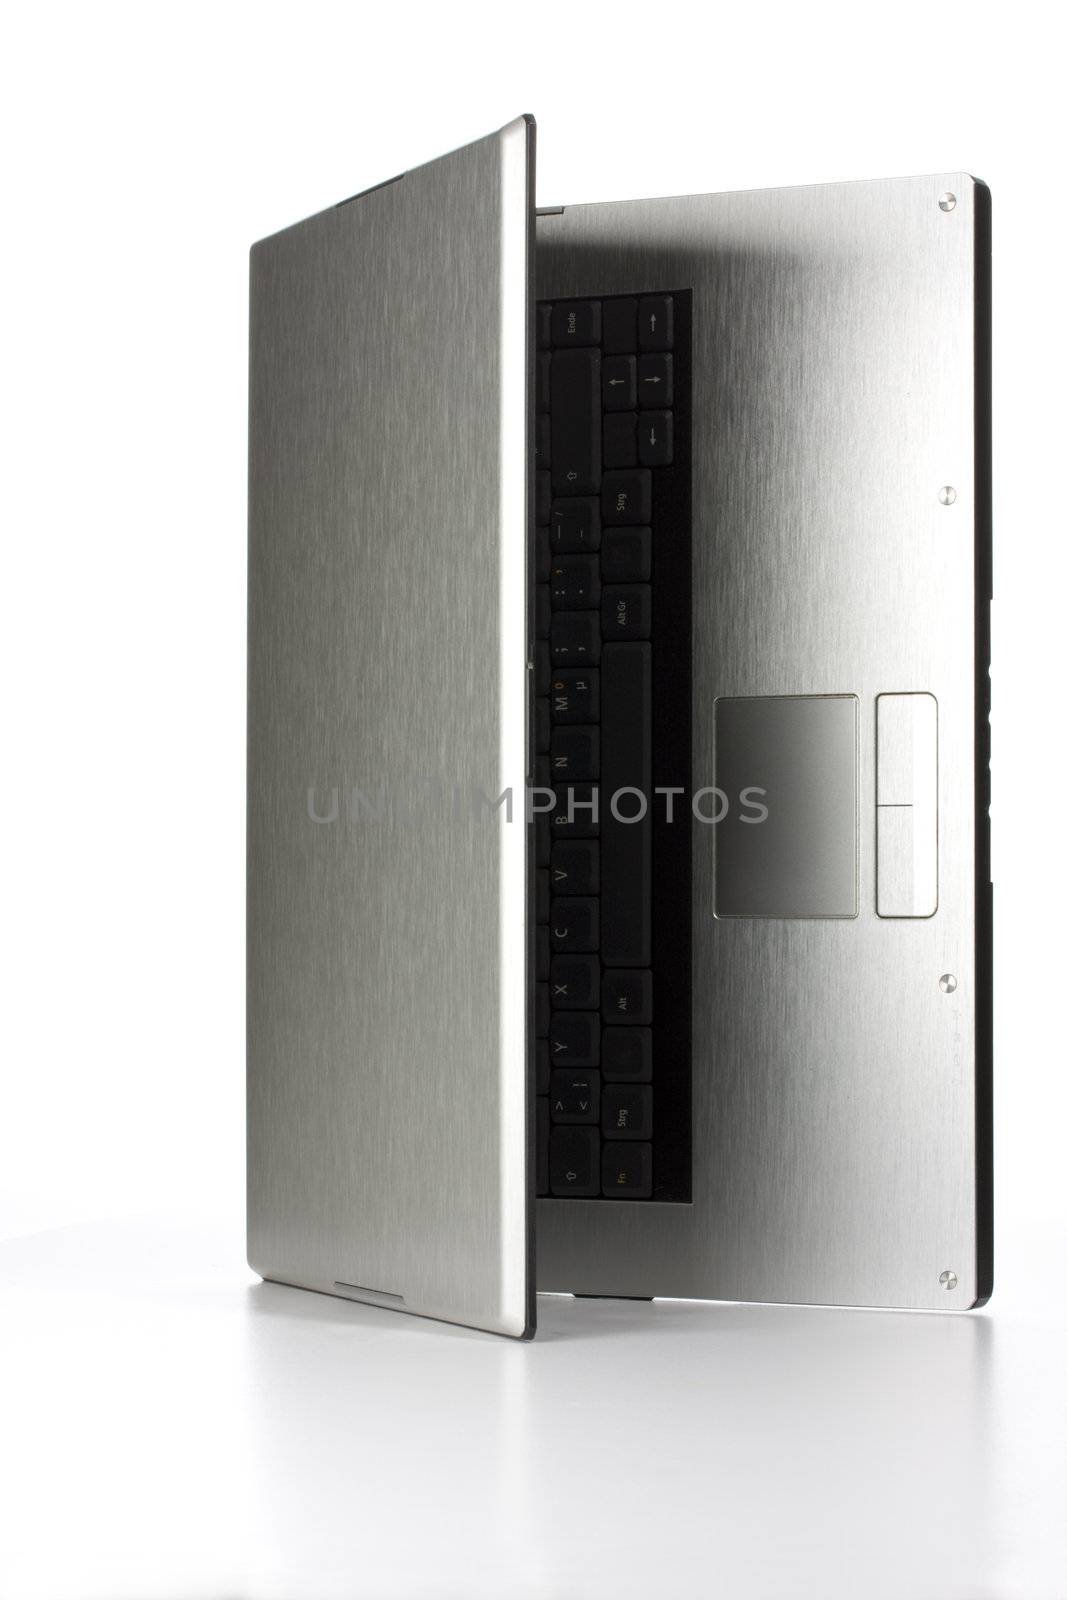 aluminium notebook computer on white background